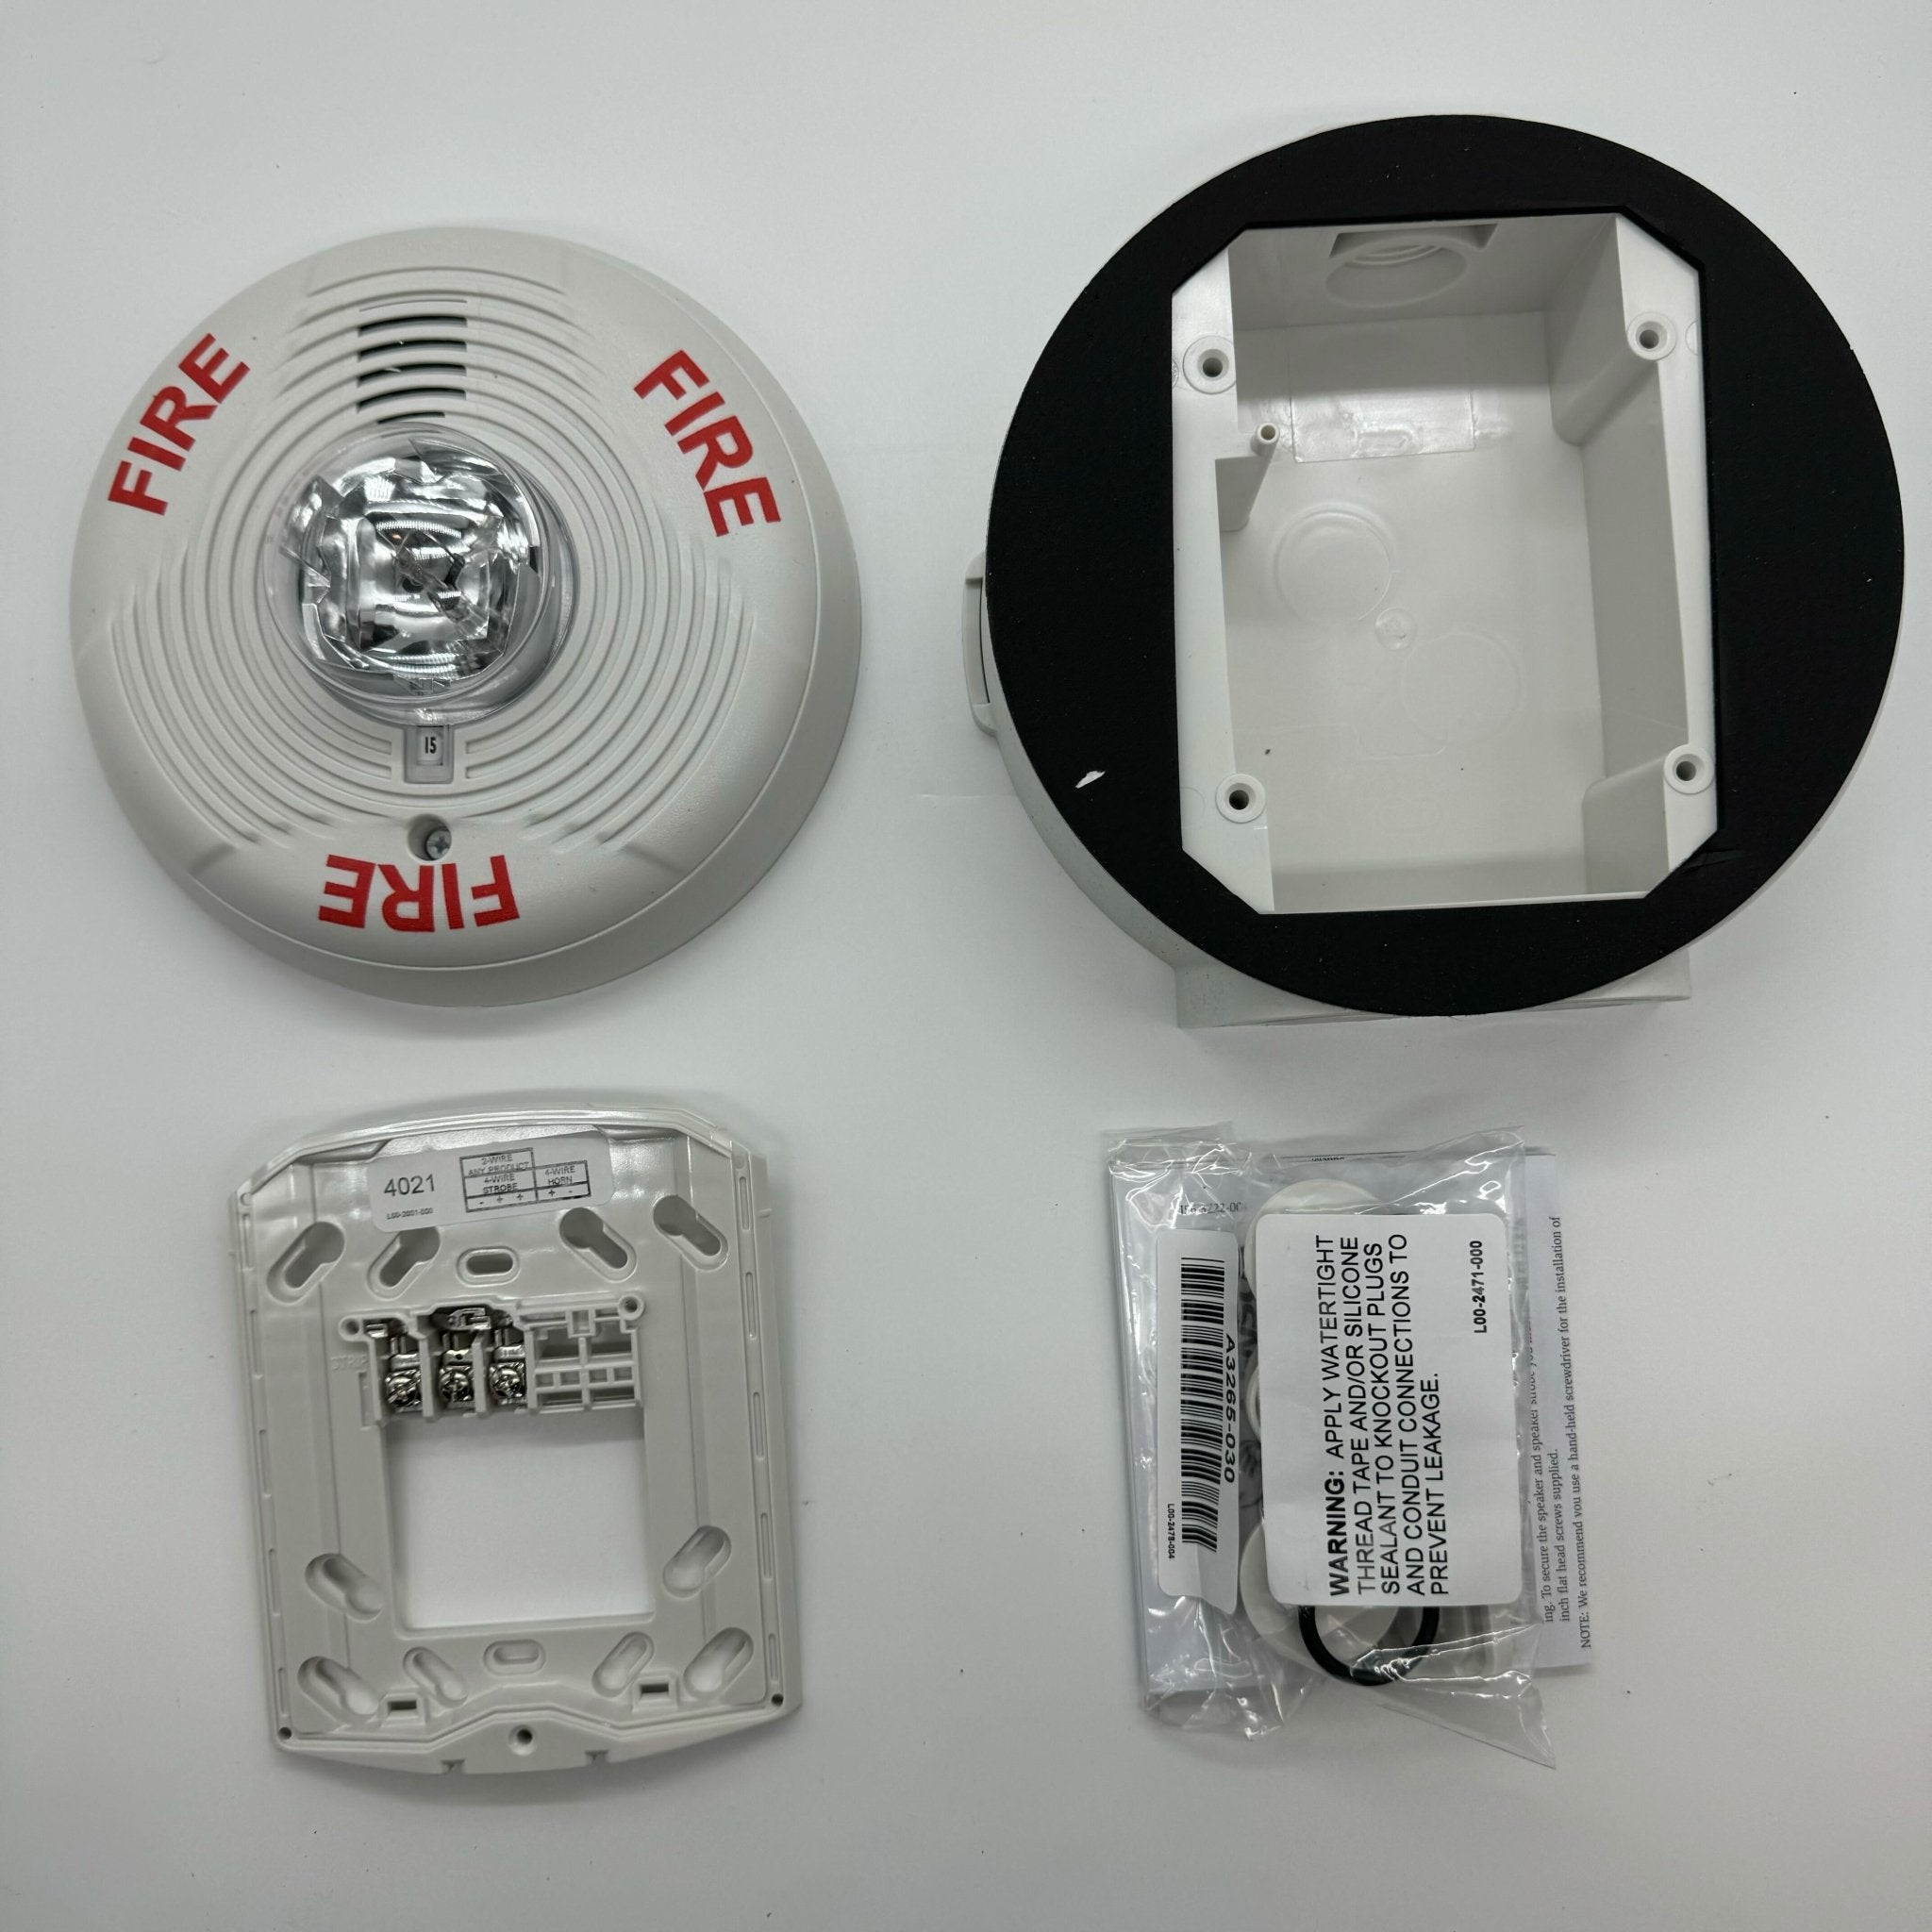 System Sensor PC2WK - The Fire Alarm Supplier